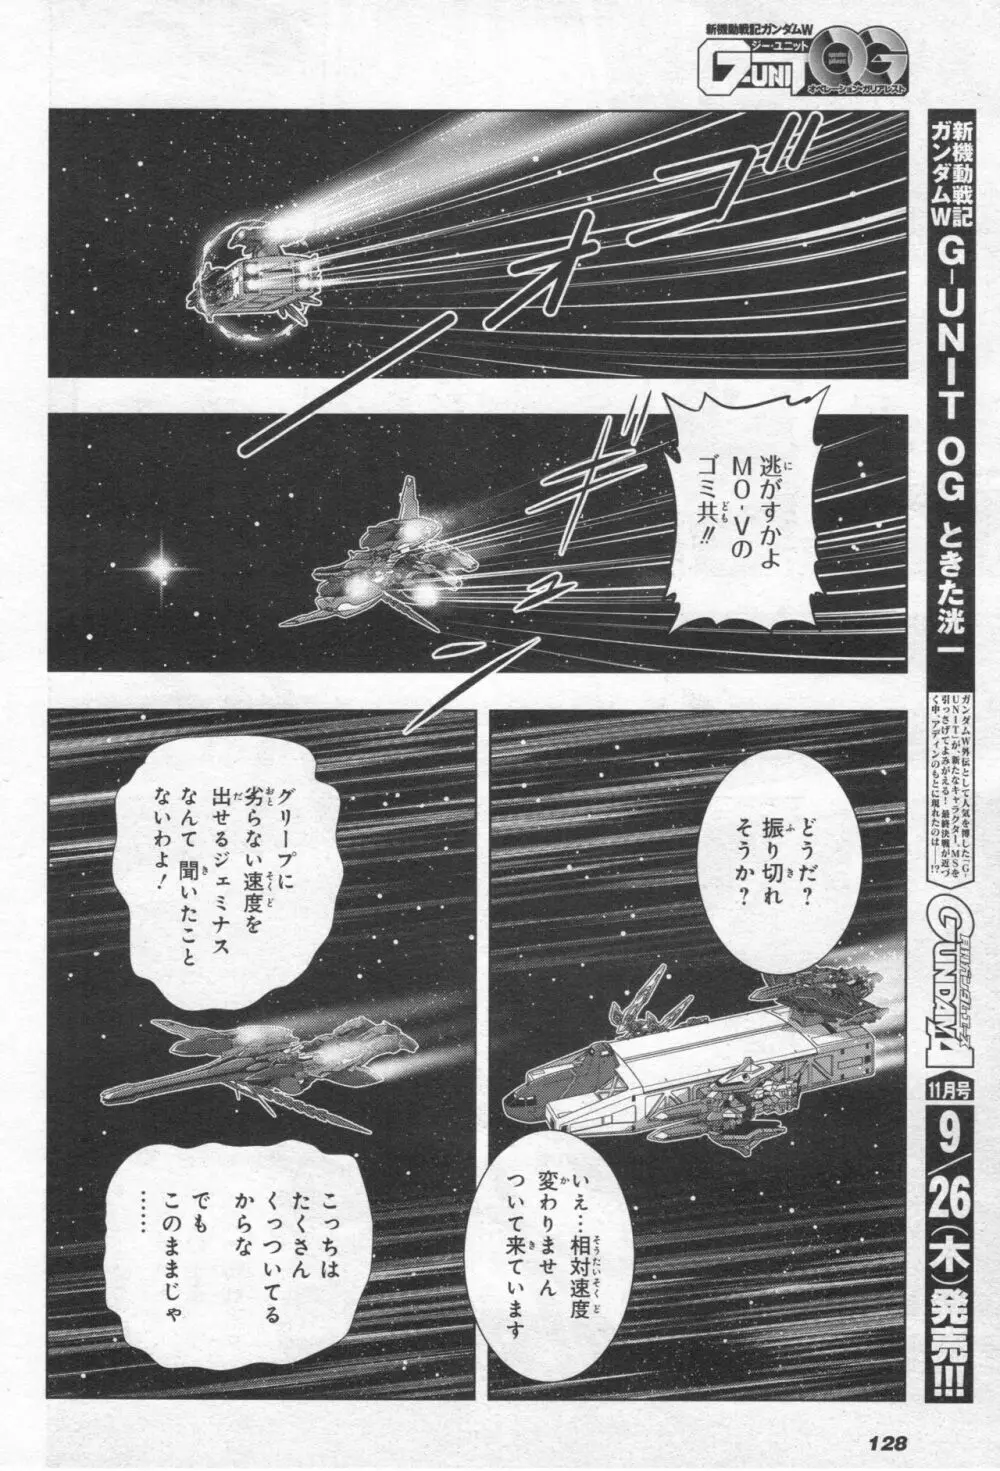 Gundam Ace – October 2019 131ページ